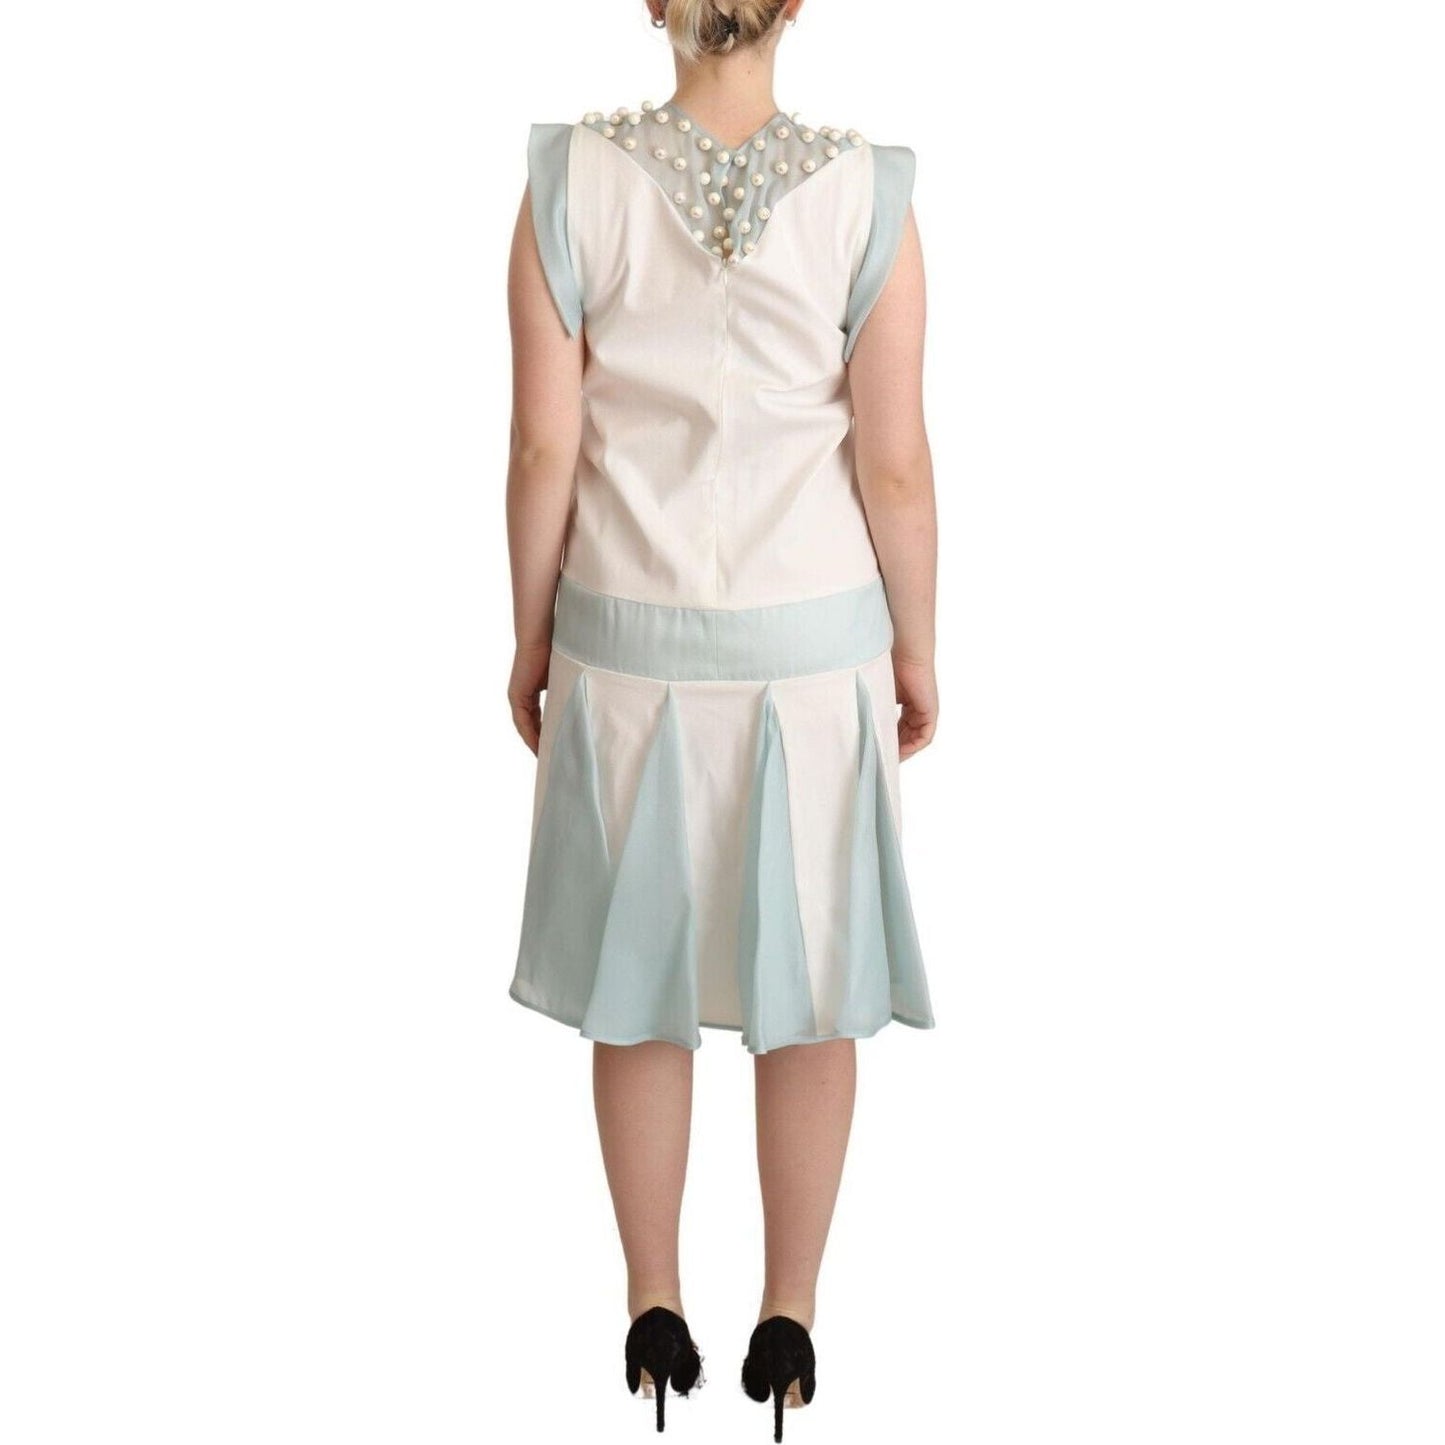 Sergei Grinko Embroidered Pearl Shift Dress Distinction WOMAN DRESSES multicolor-faux-pearl-sleeveless-shift-midi-dress s-l1600-2-90-cea436ed-7a8.jpg